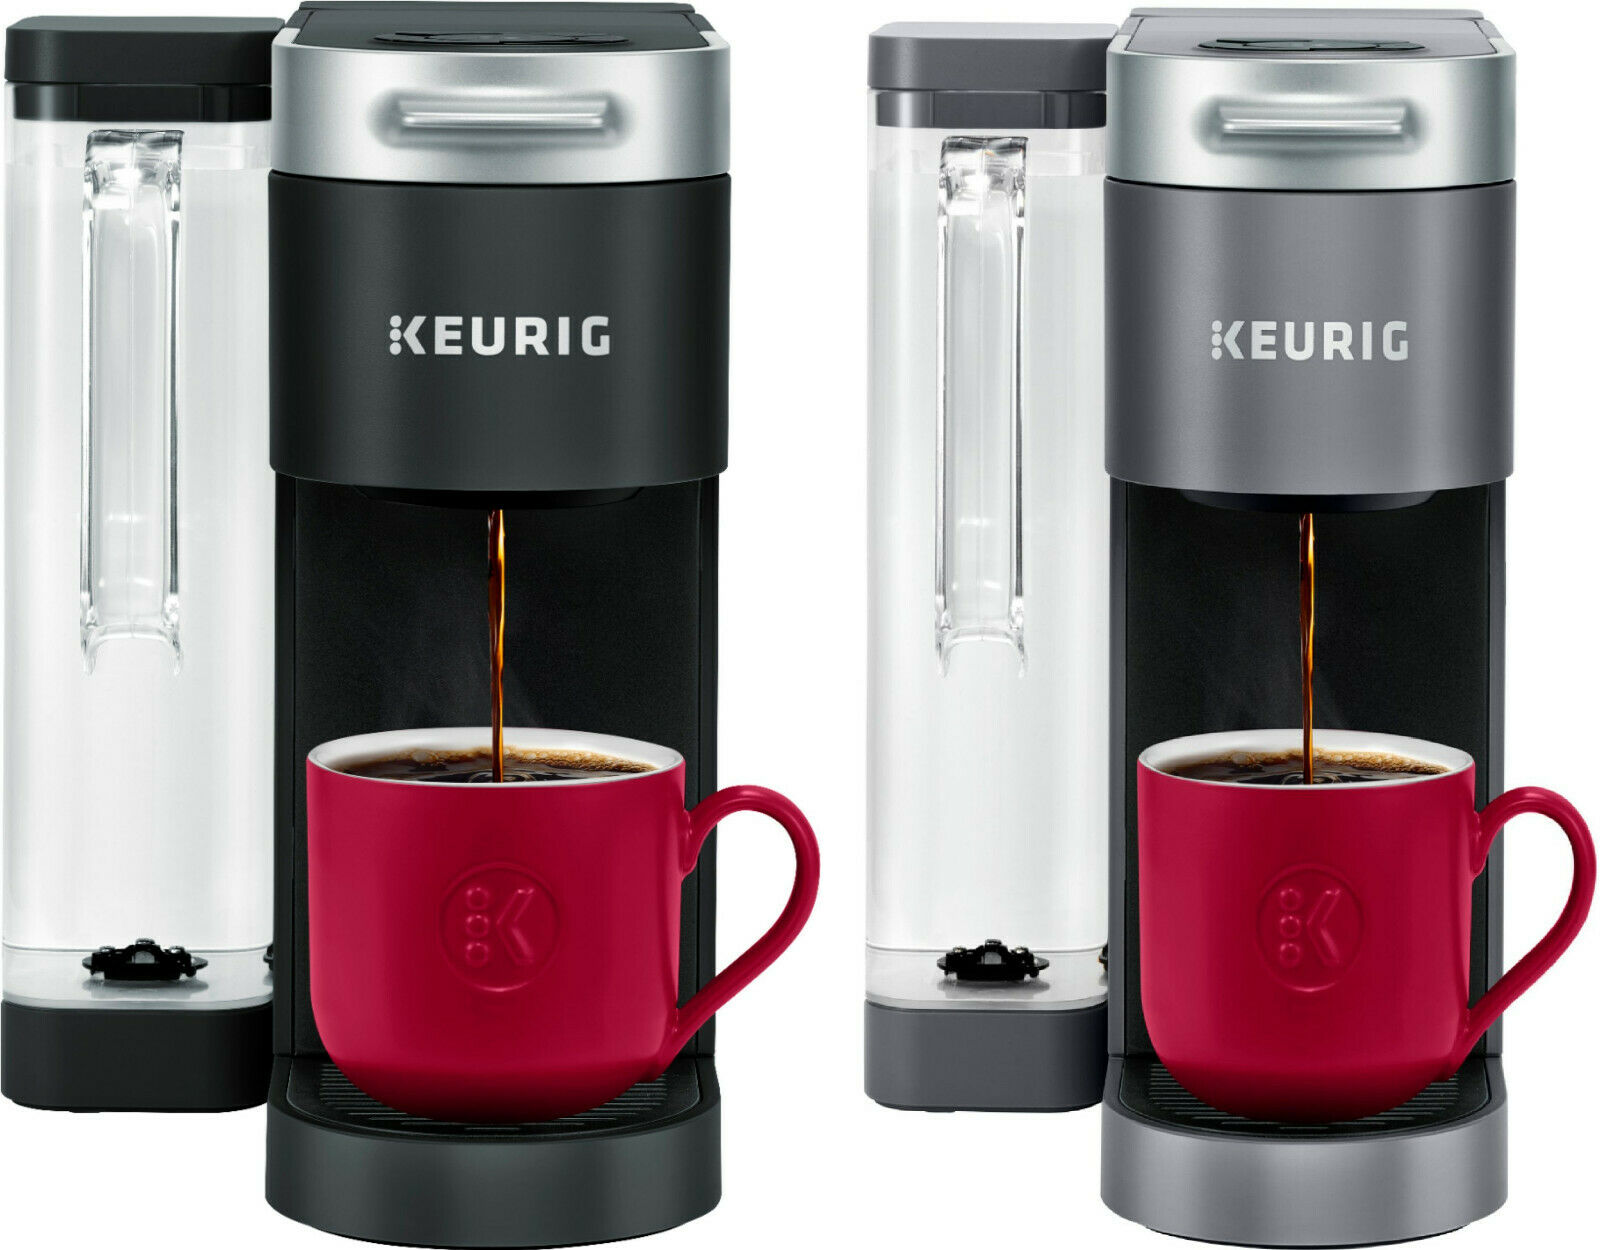 Keurig K-supreme Single Serve Coffee Maker